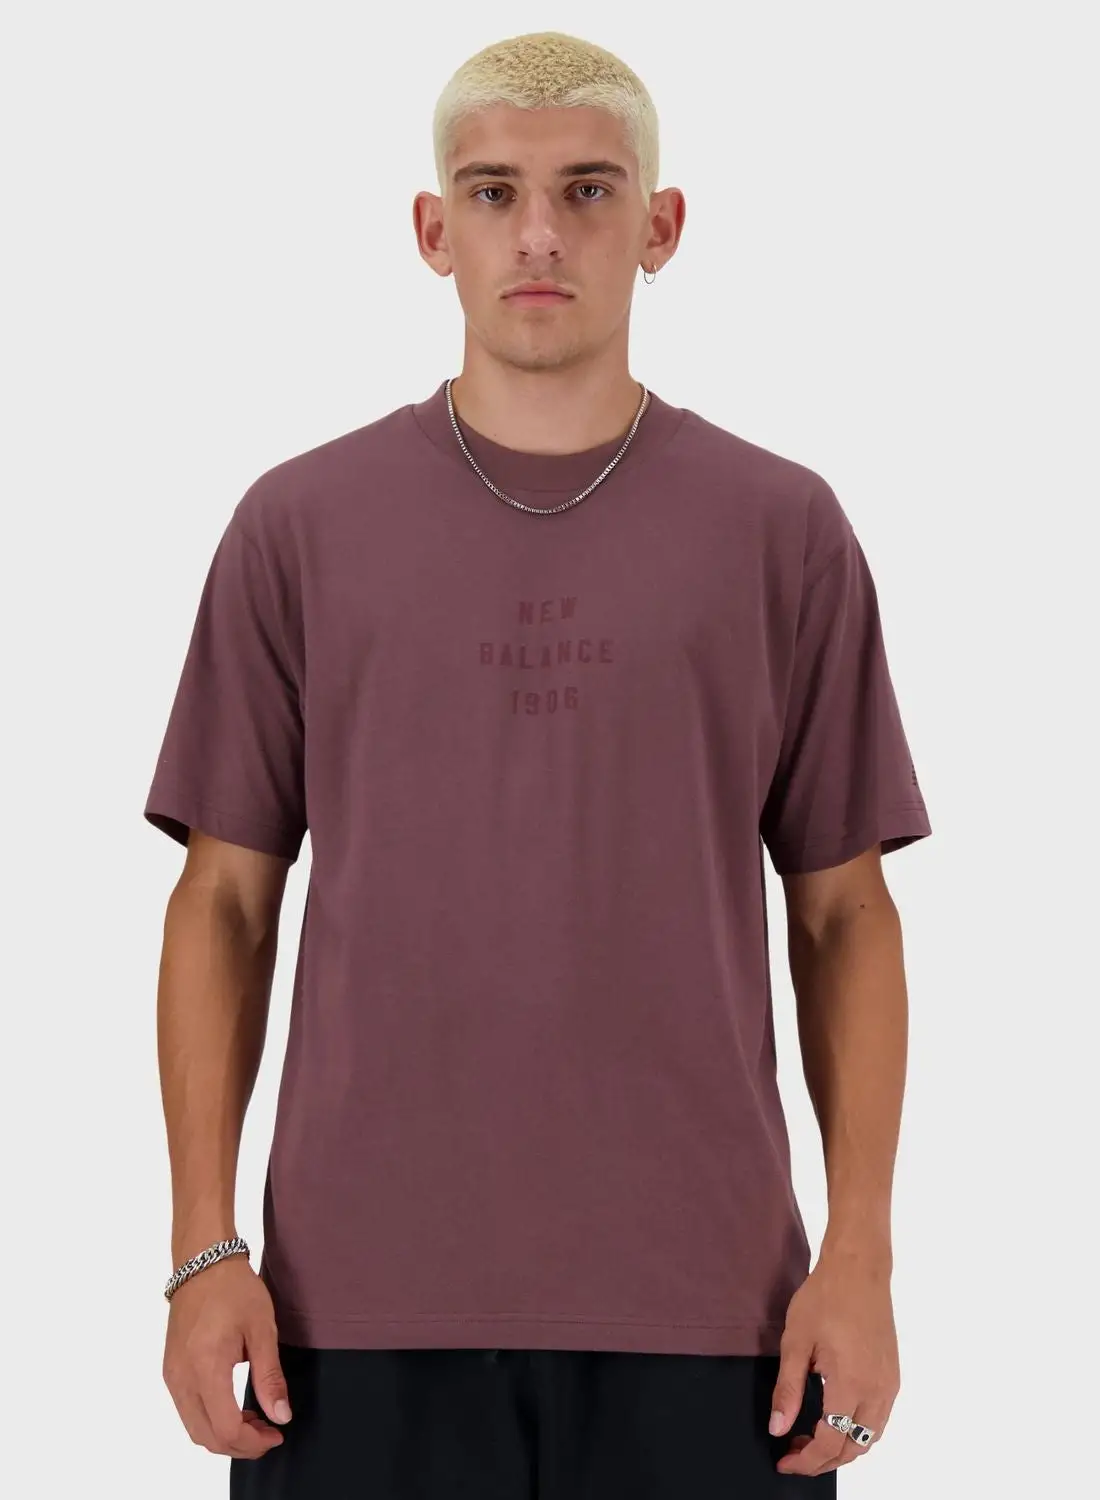 New Balance Graphic T-Shirt